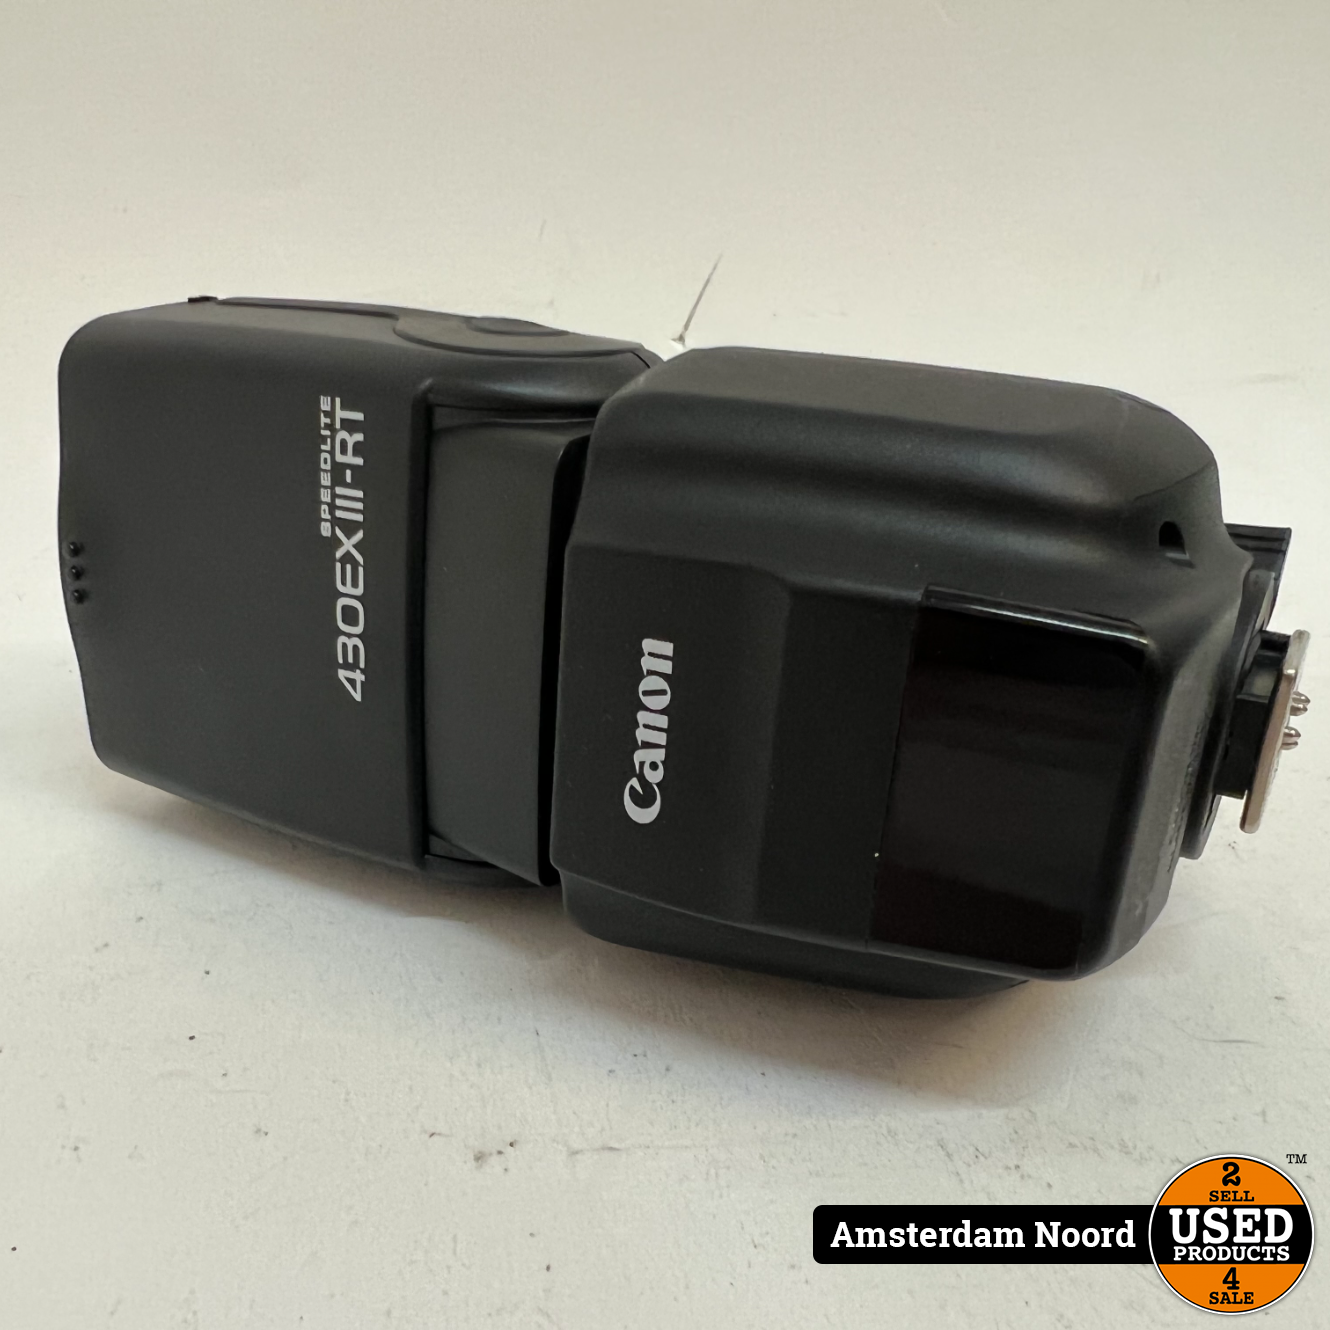 canon Canon Speedlite 430EX III-RT Flitser Used Products Amsterdam Noord